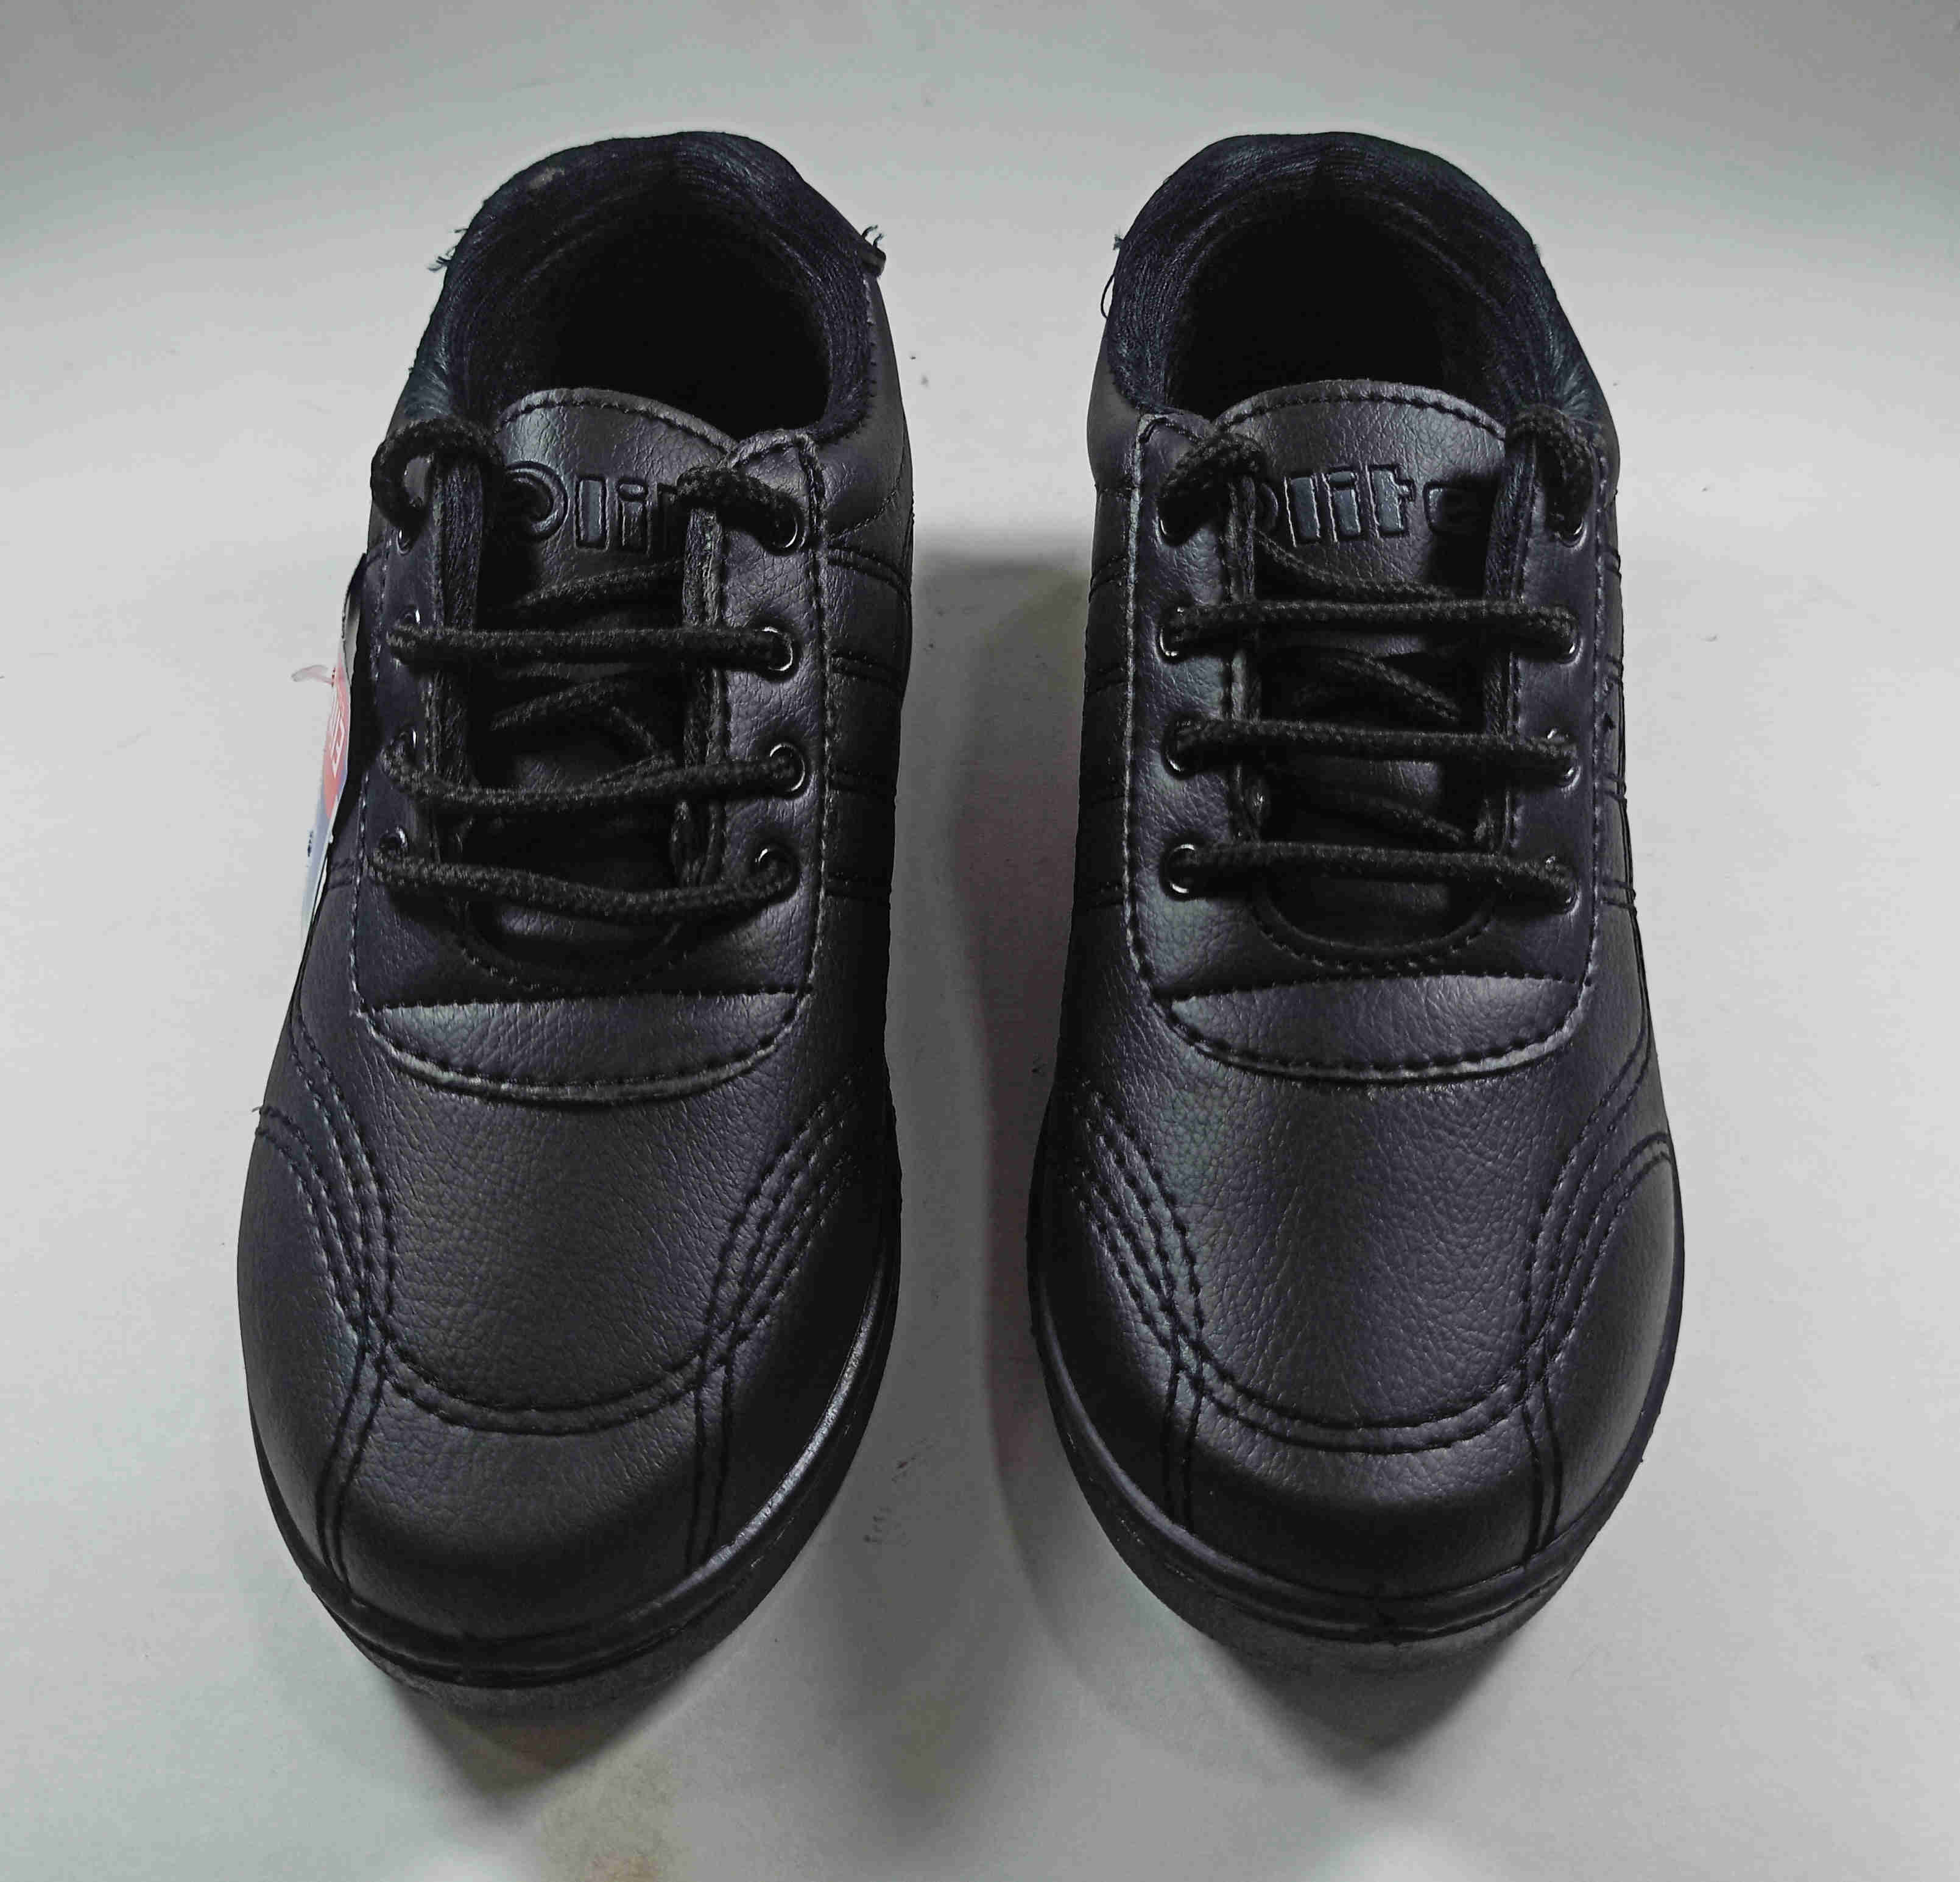 School Jogger Shoes Black For Boys 